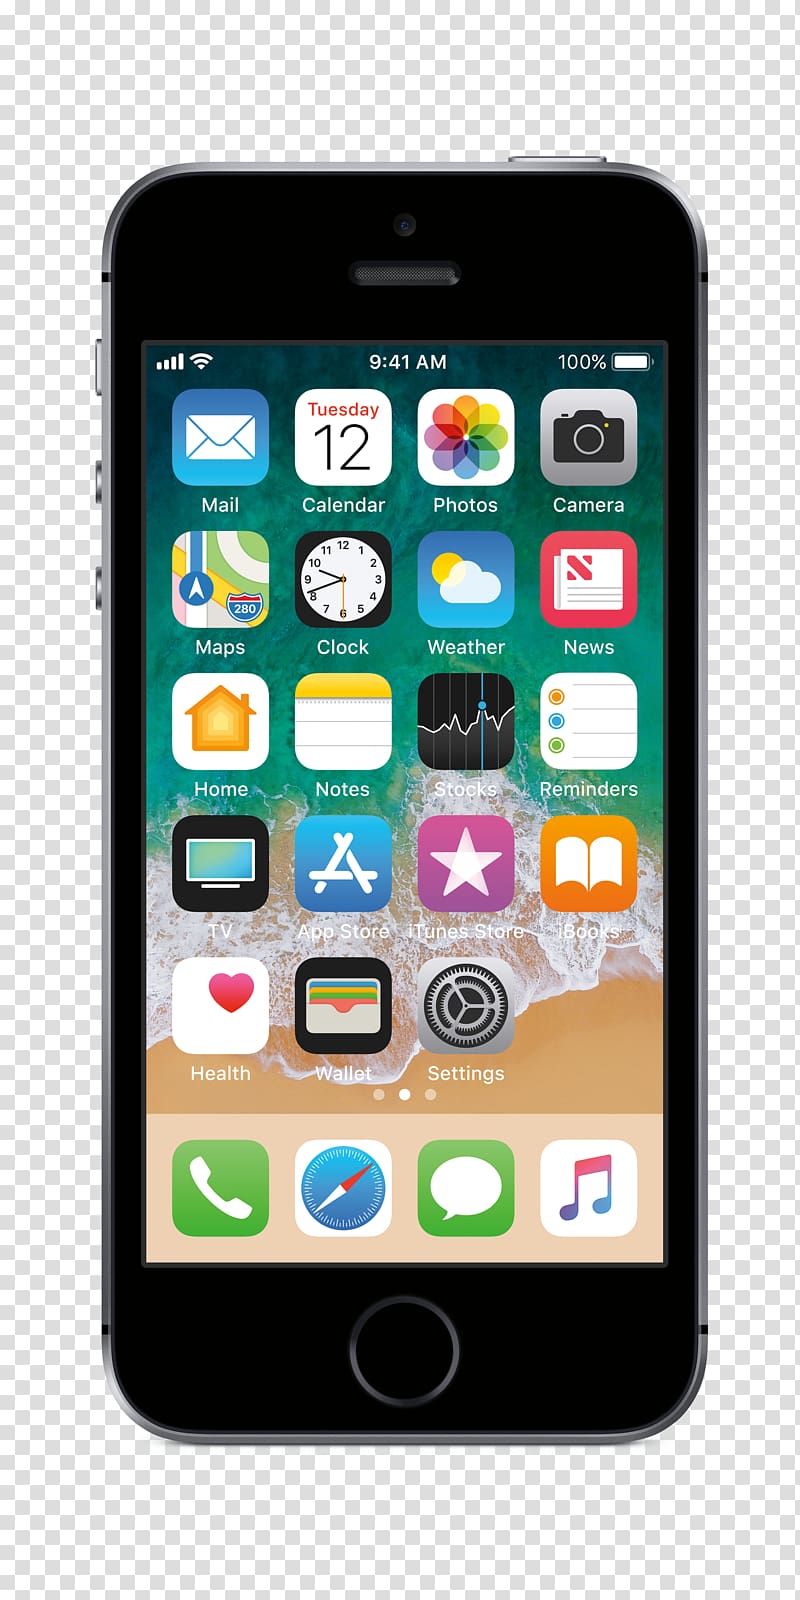 iPhone 7 iPhone X iPhone 4 iPhone SE iPhone 6s Plus, apple transparent background PNG clipart